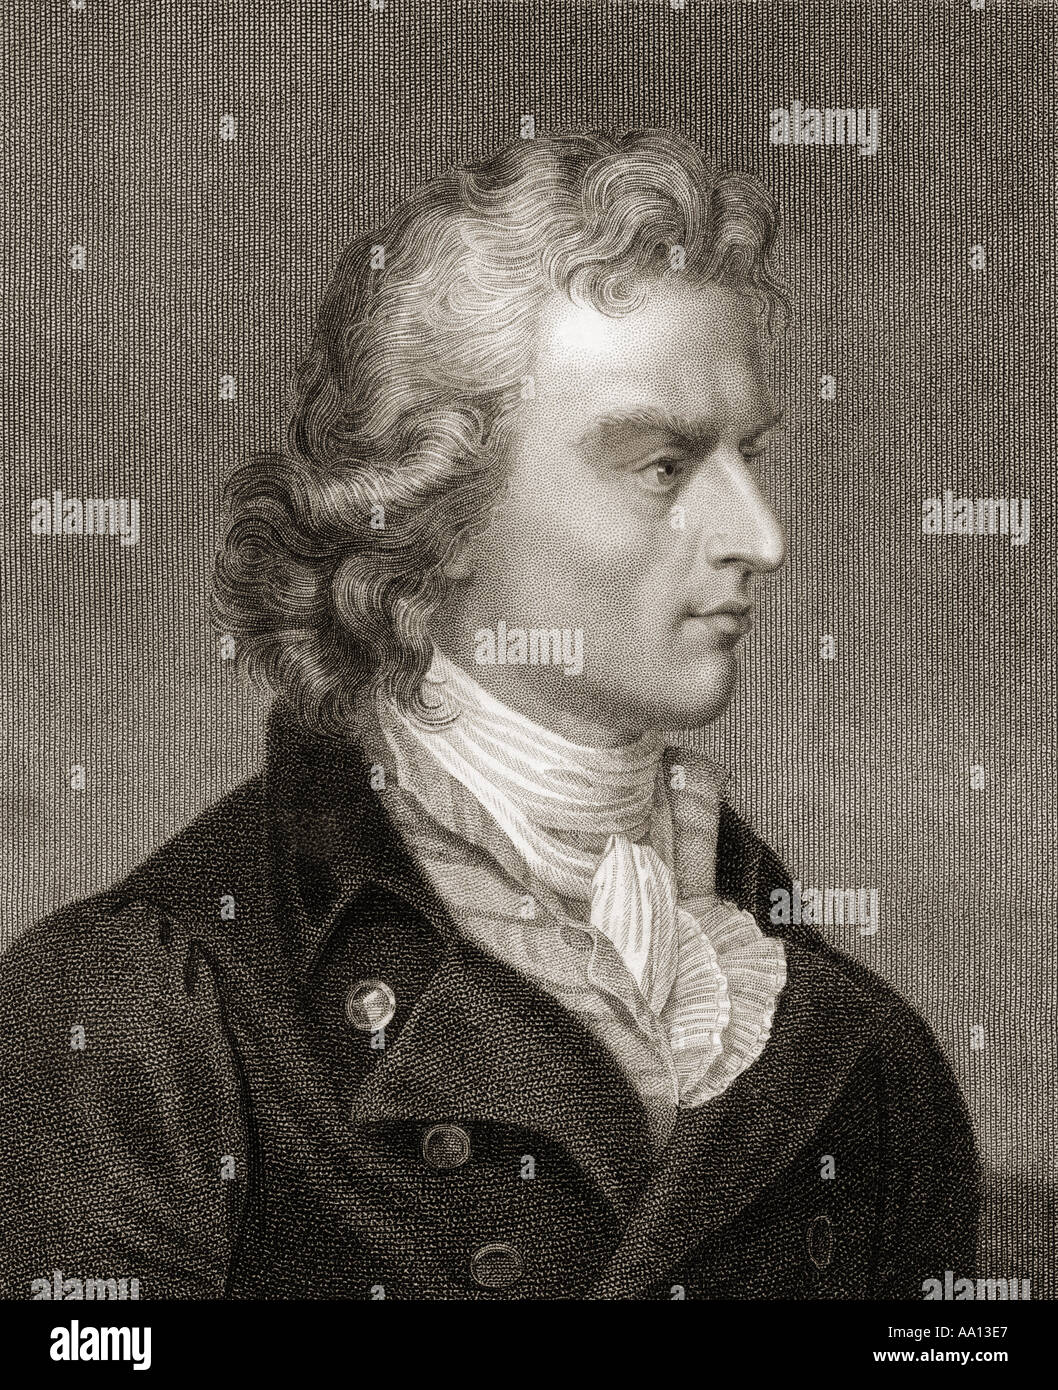 Johann Christoph Friedrich von Schiller, 1759 - 1805. Poeta tedesco, filosofo, medico, storico e drammaturgo. Foto Stock